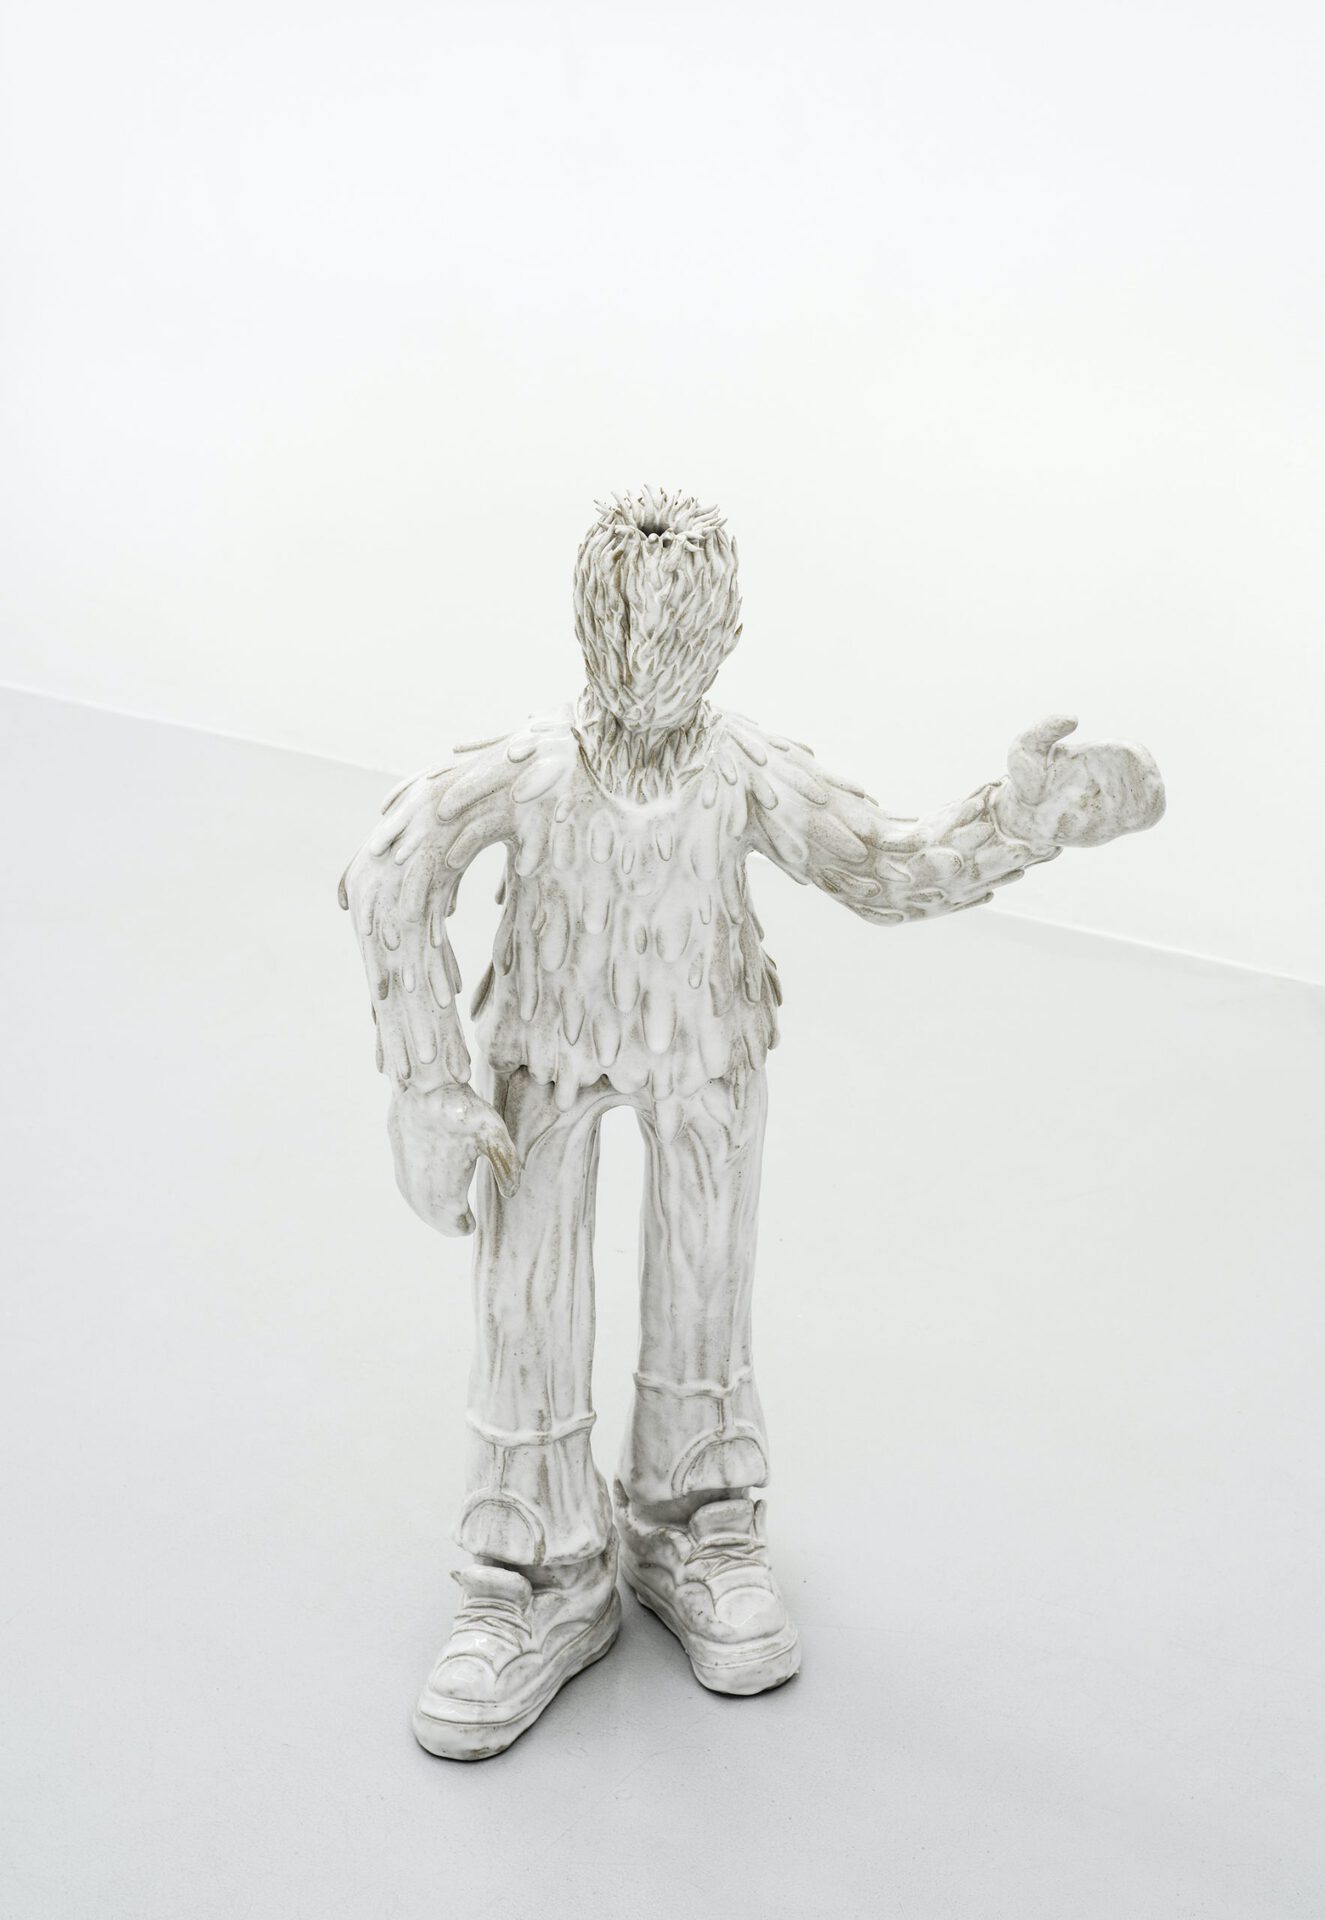 Immanuel Birkert, Vase (31), glazed ceramic, 2021